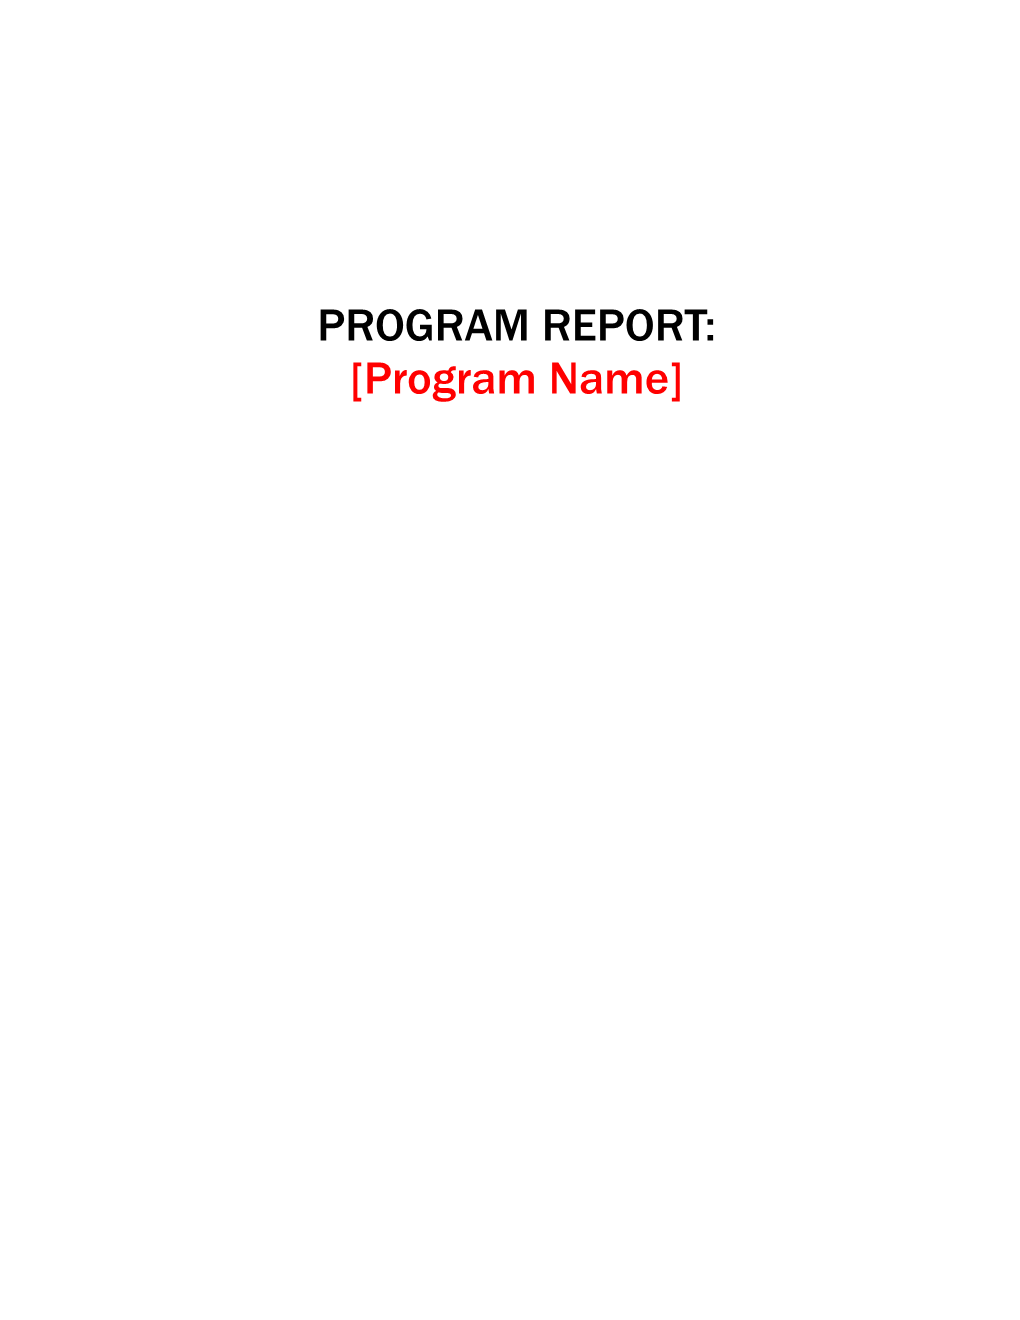 Program Report Template